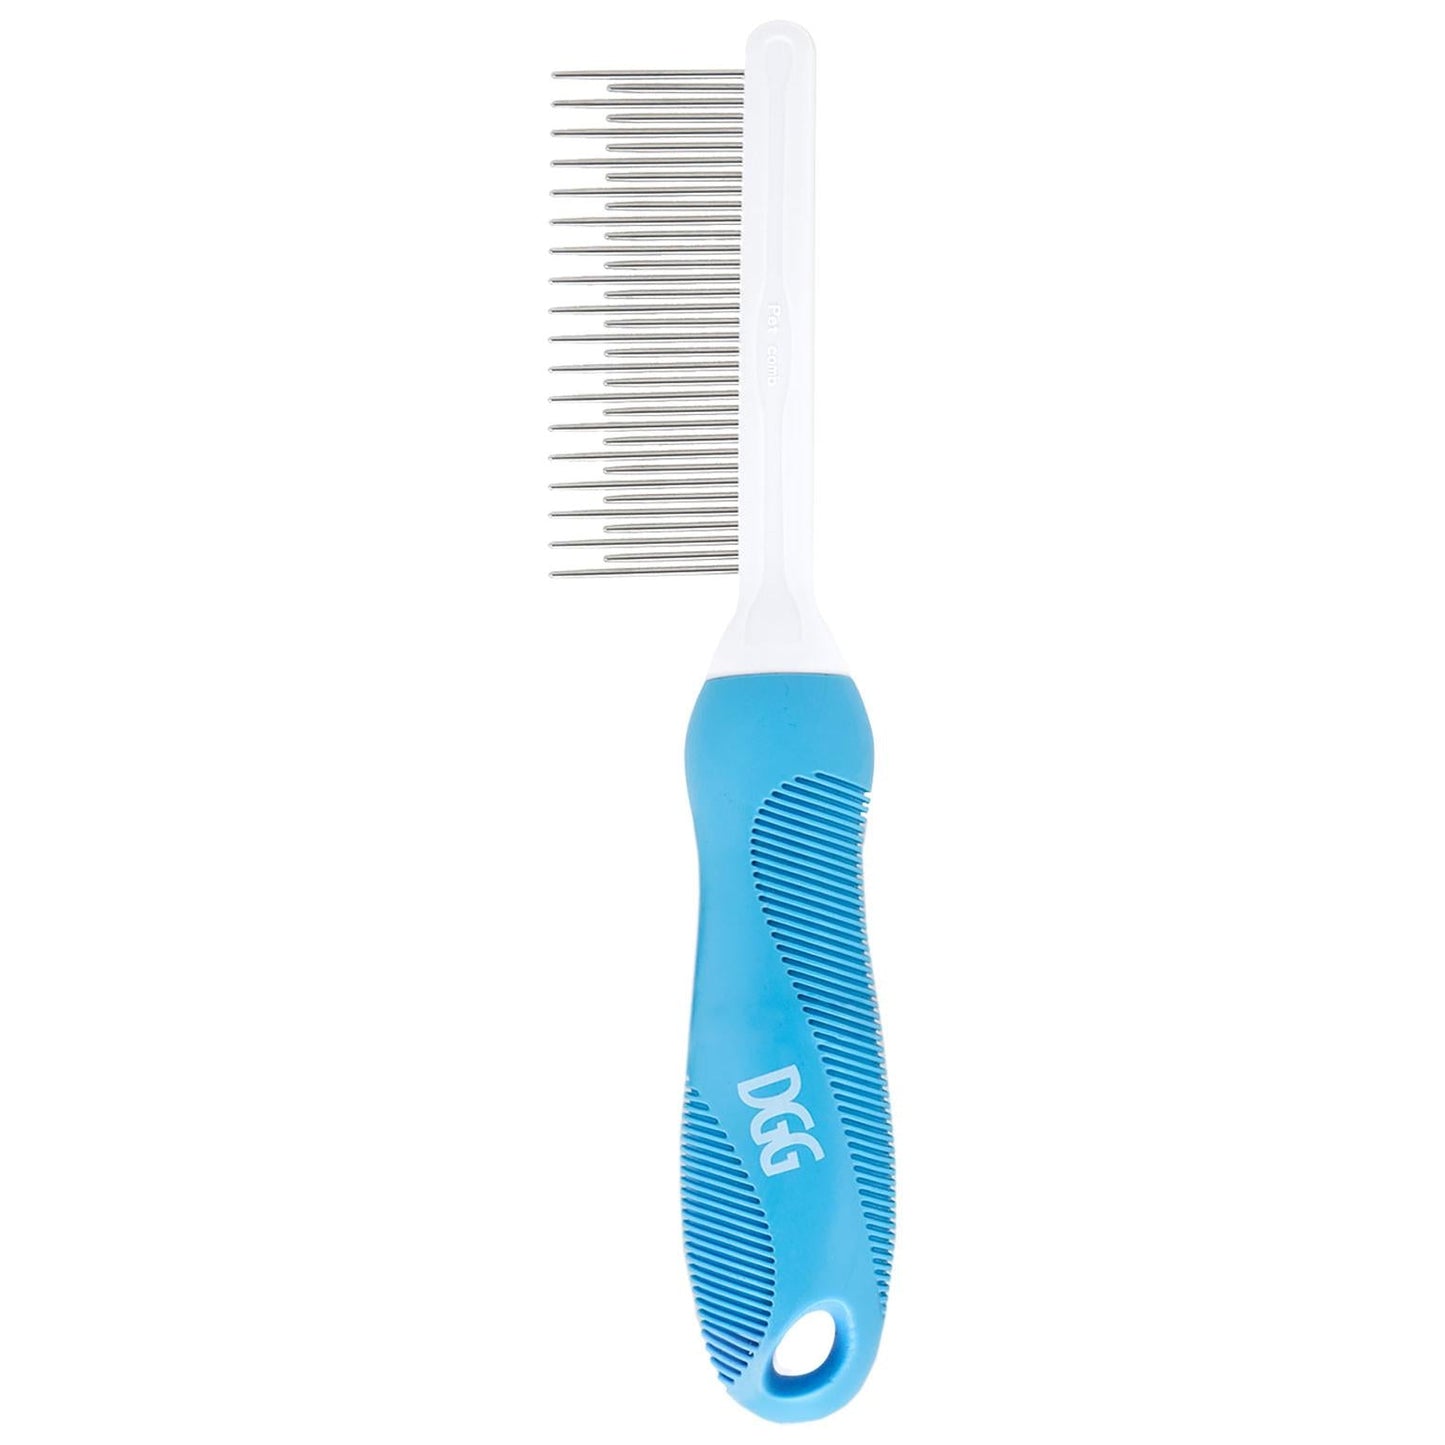 DGG Grooming Comb